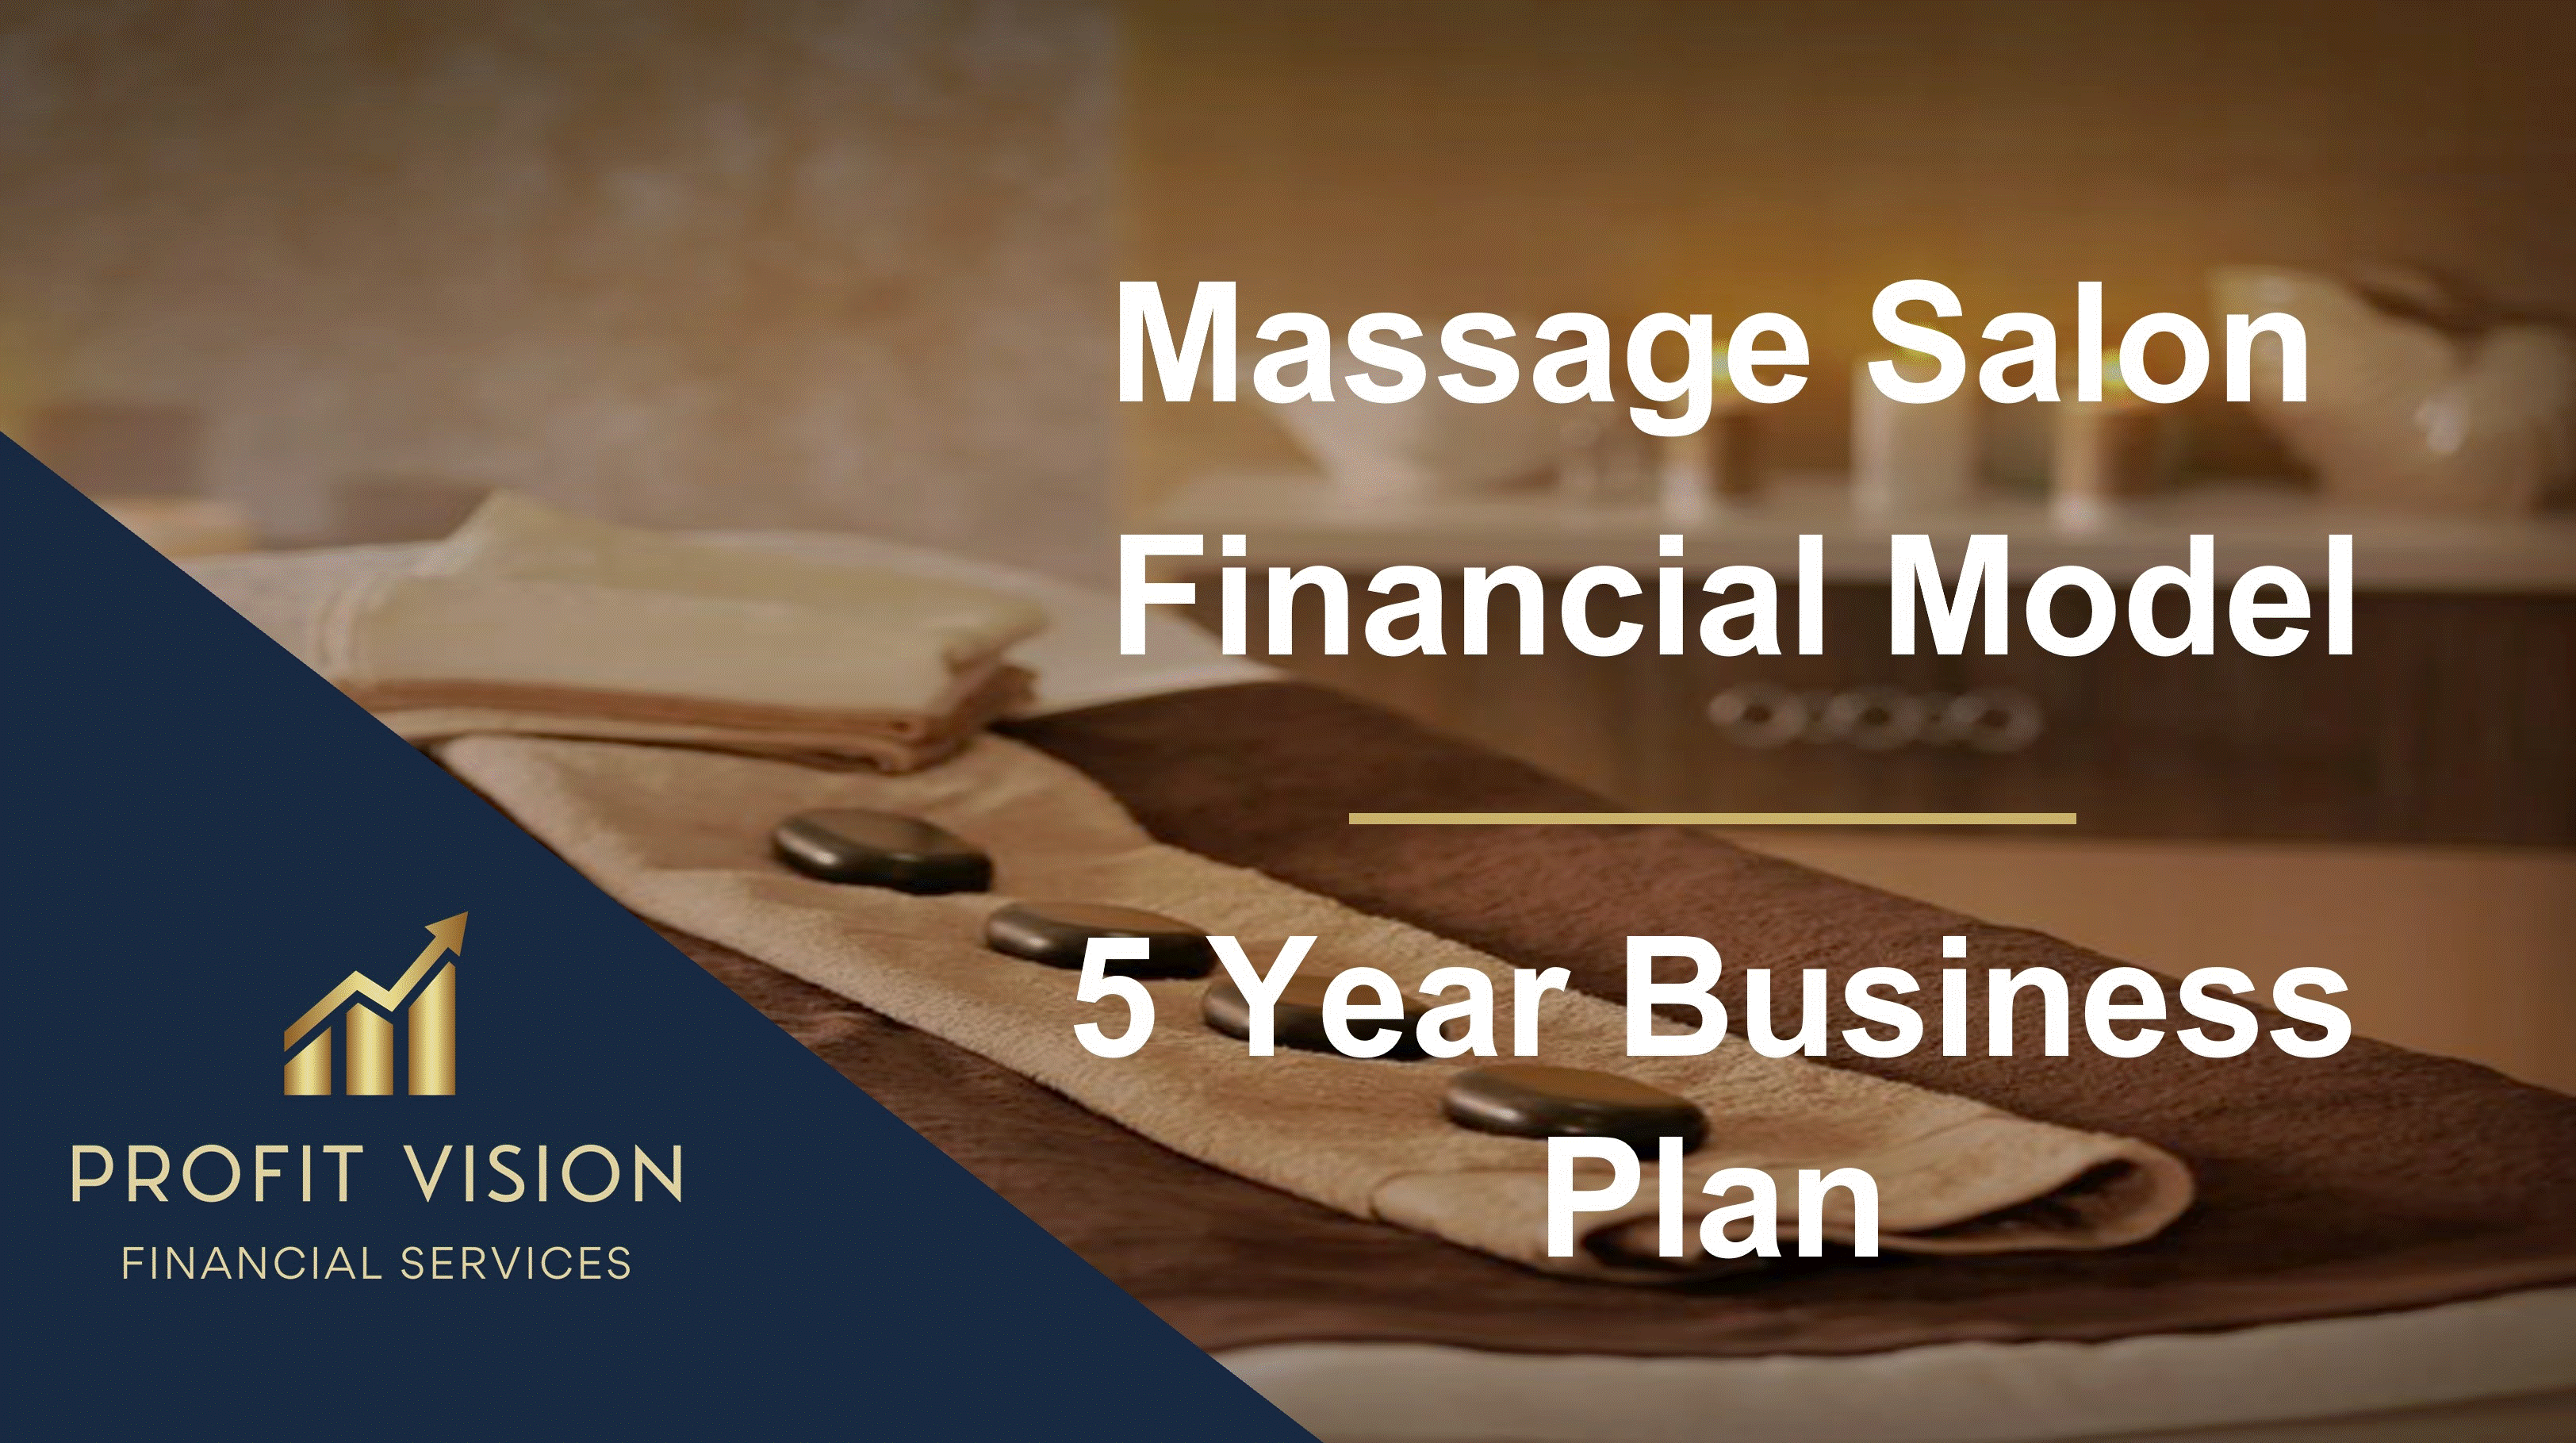 Massage Salon Financial Model - 5 Year Business Plan (Excel workbook (XLSX)) Preview Image